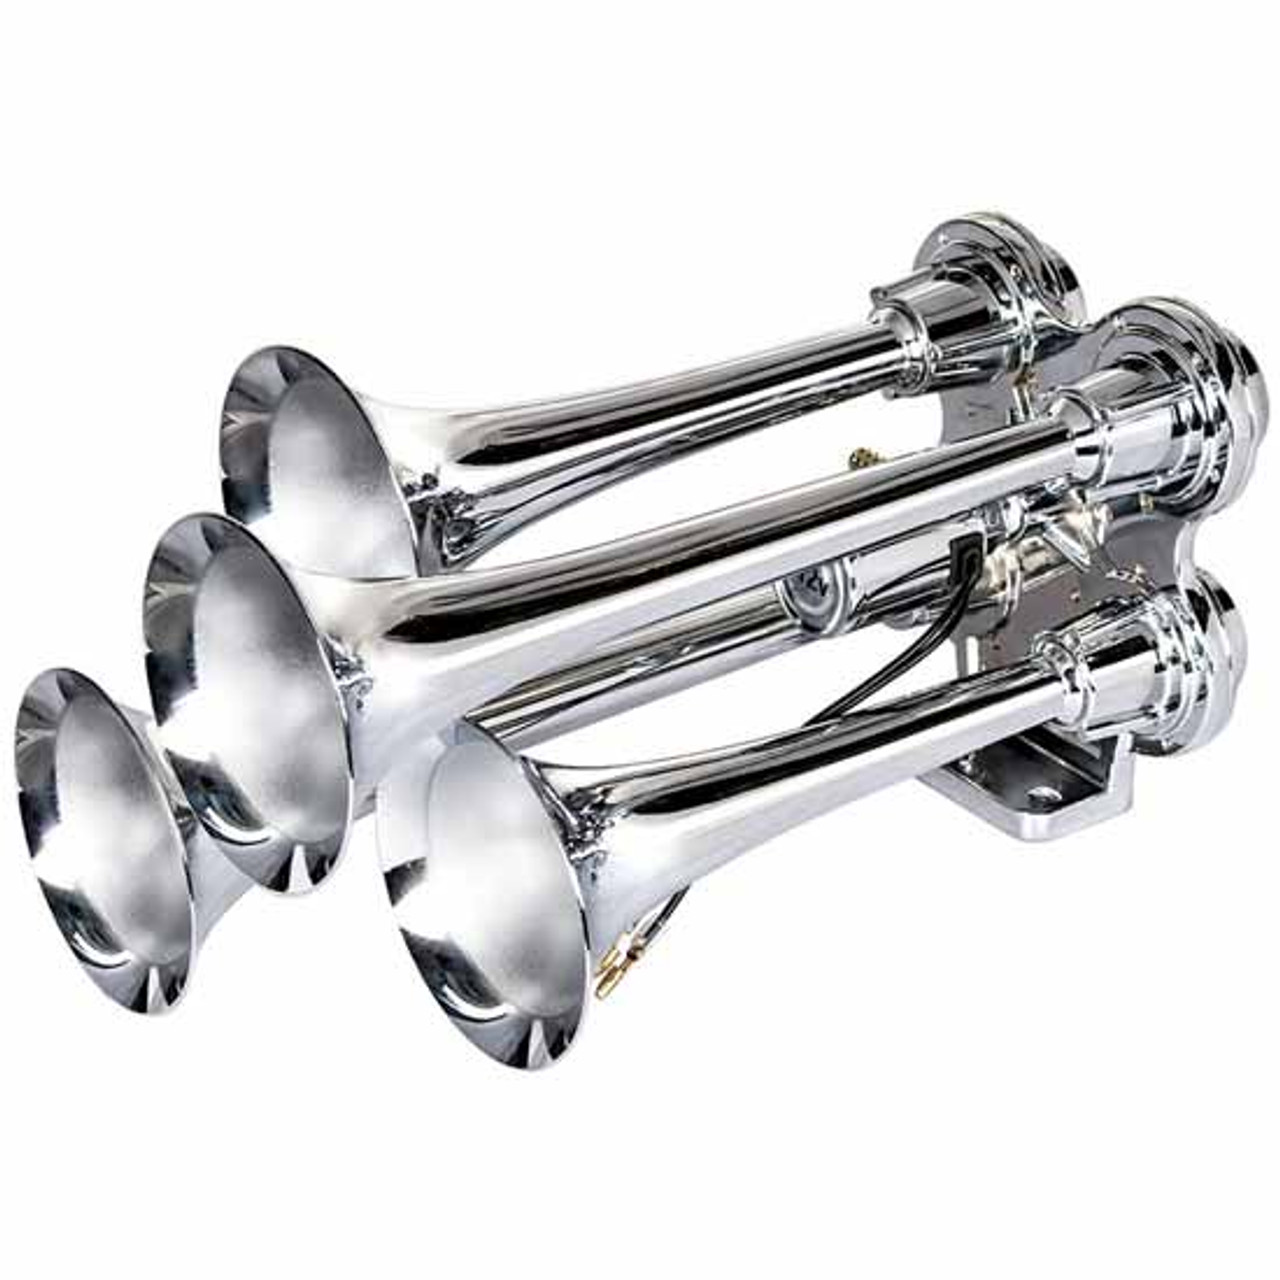 Old Timer Horn - Chrome Trumpet